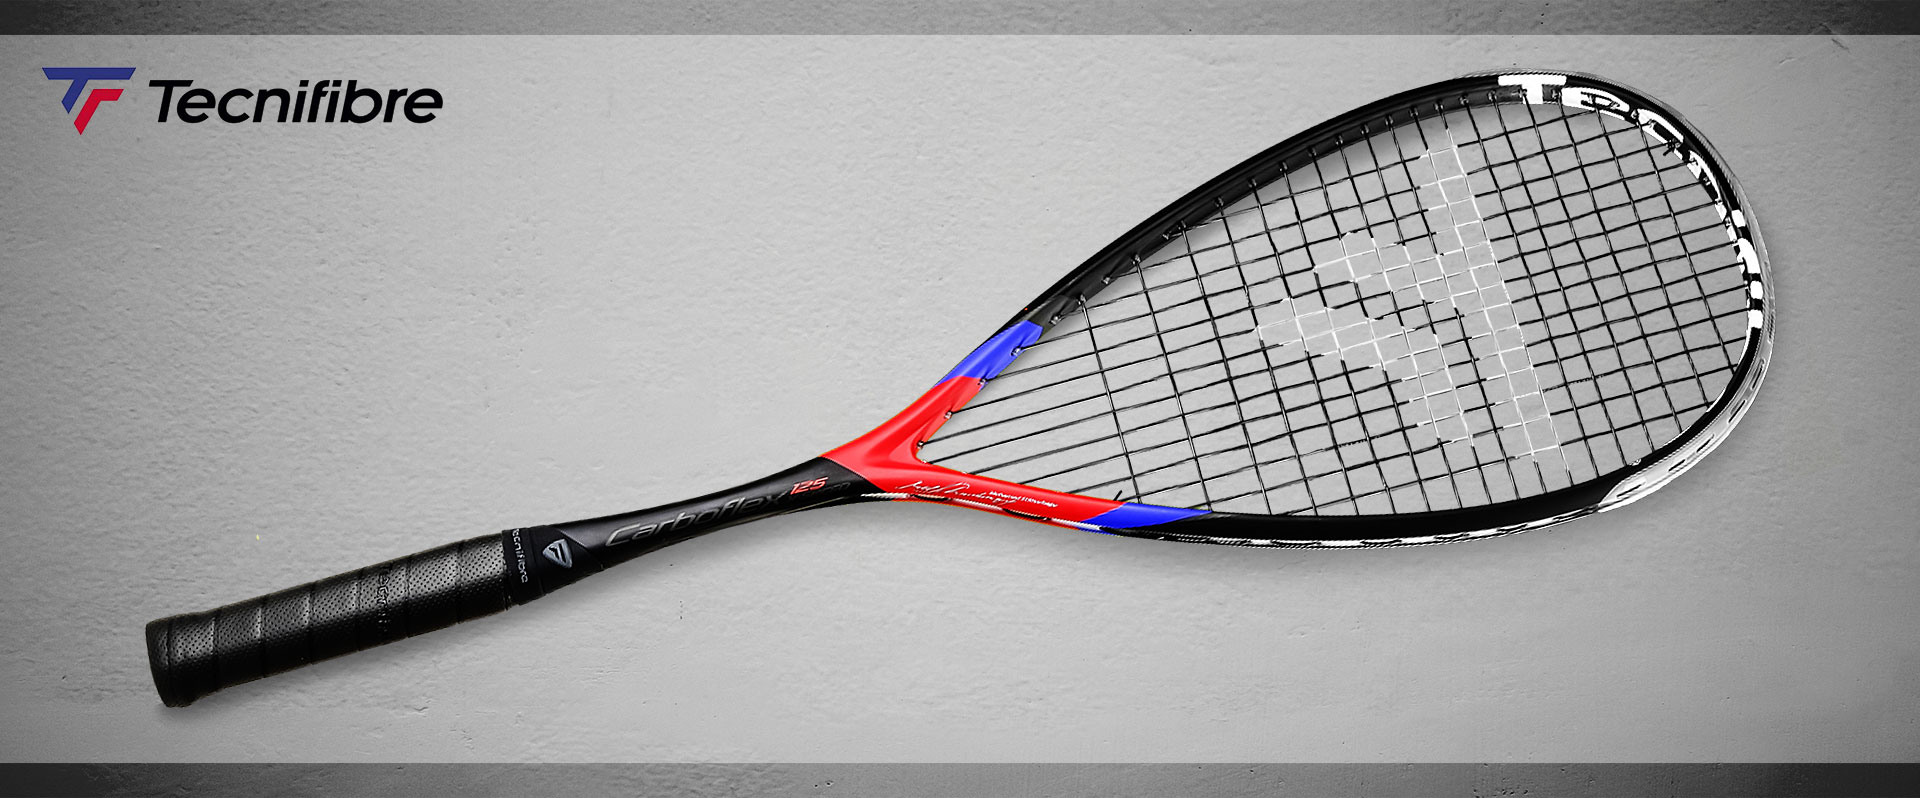 Tecnifibre Squash Racket Carboflex 125 S Basaltex Multiaxial Racquet 